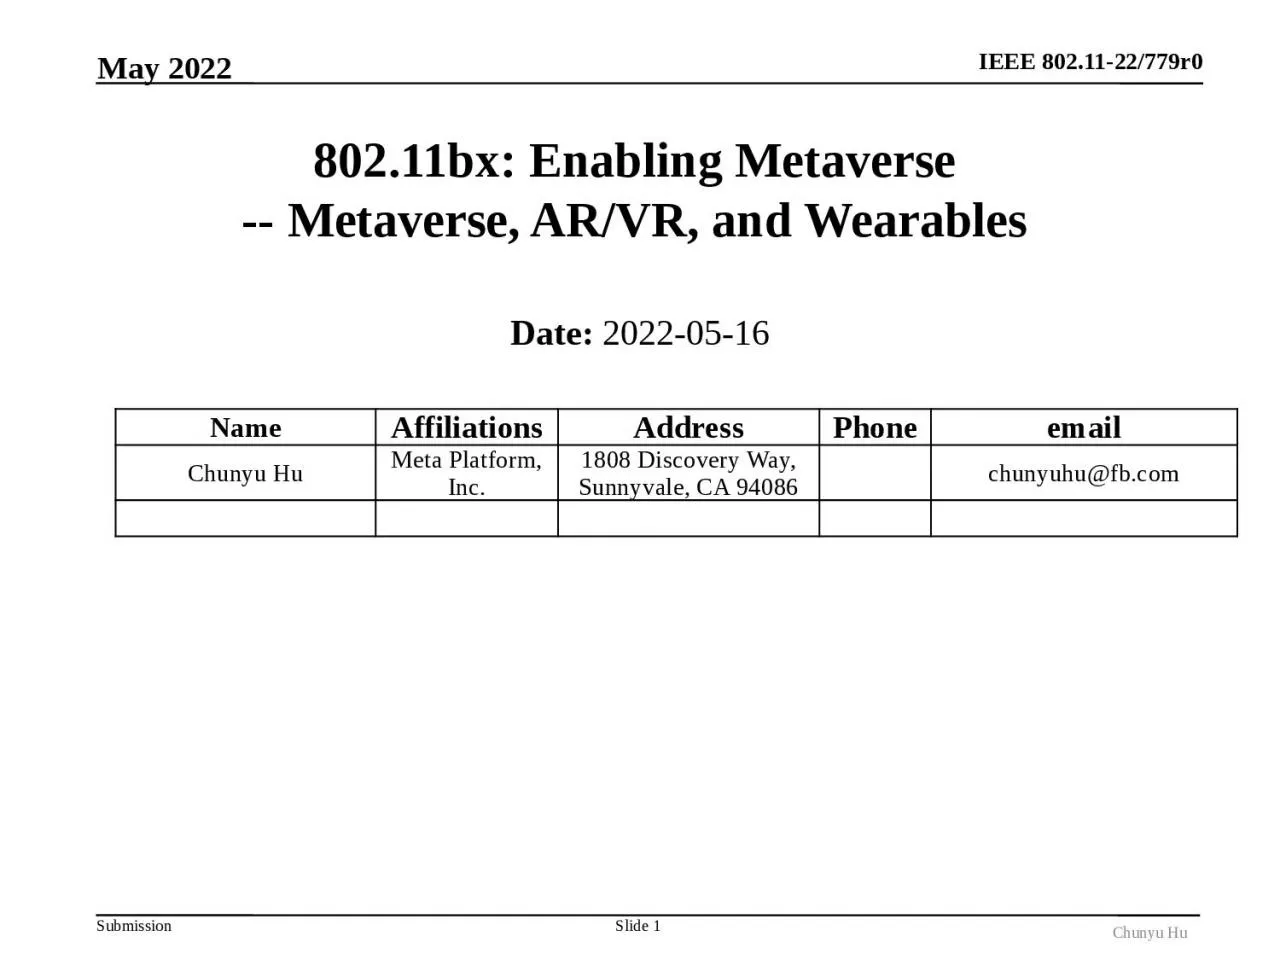 Date:  2022-05-16 802.11bx: Enabling Metaverse